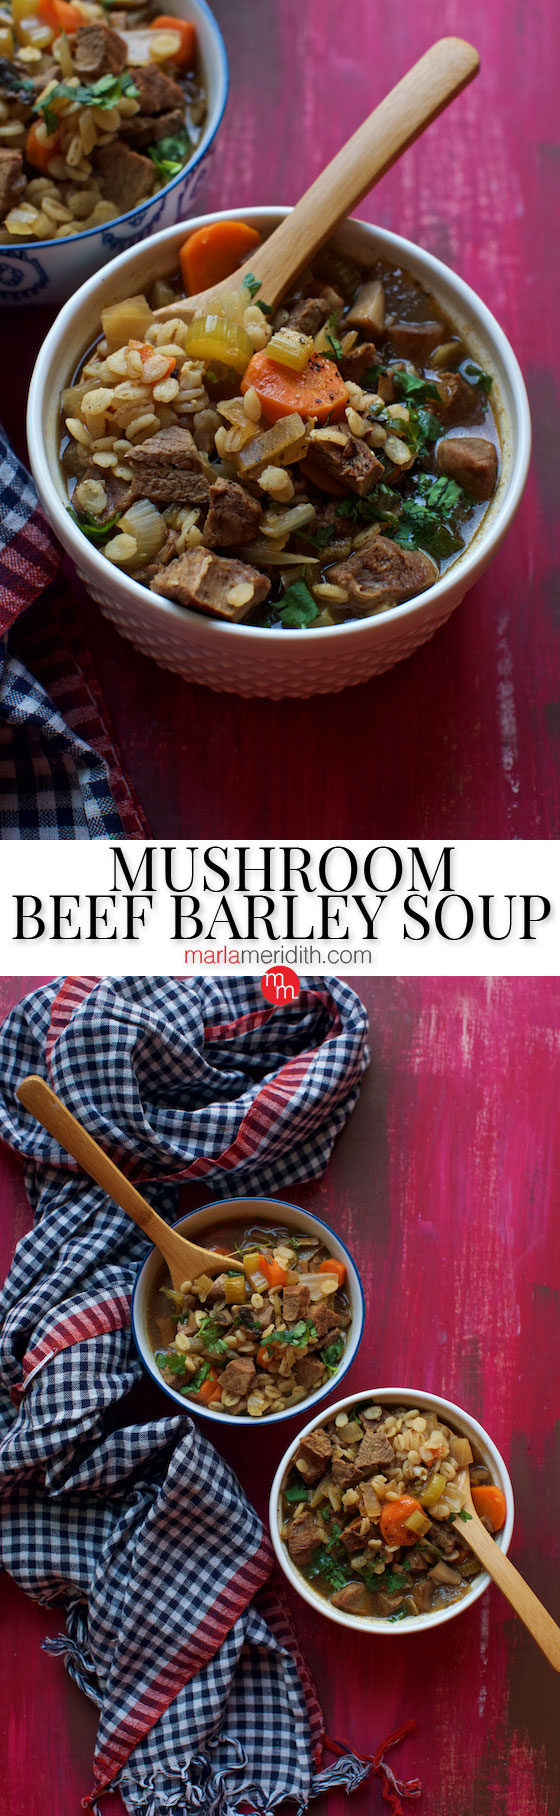 Mushroom, Beef & Barley Soup recipe. A hearty, warming and healthy bowl of JOY! MarlaMeridith.com ( @marlameridith )